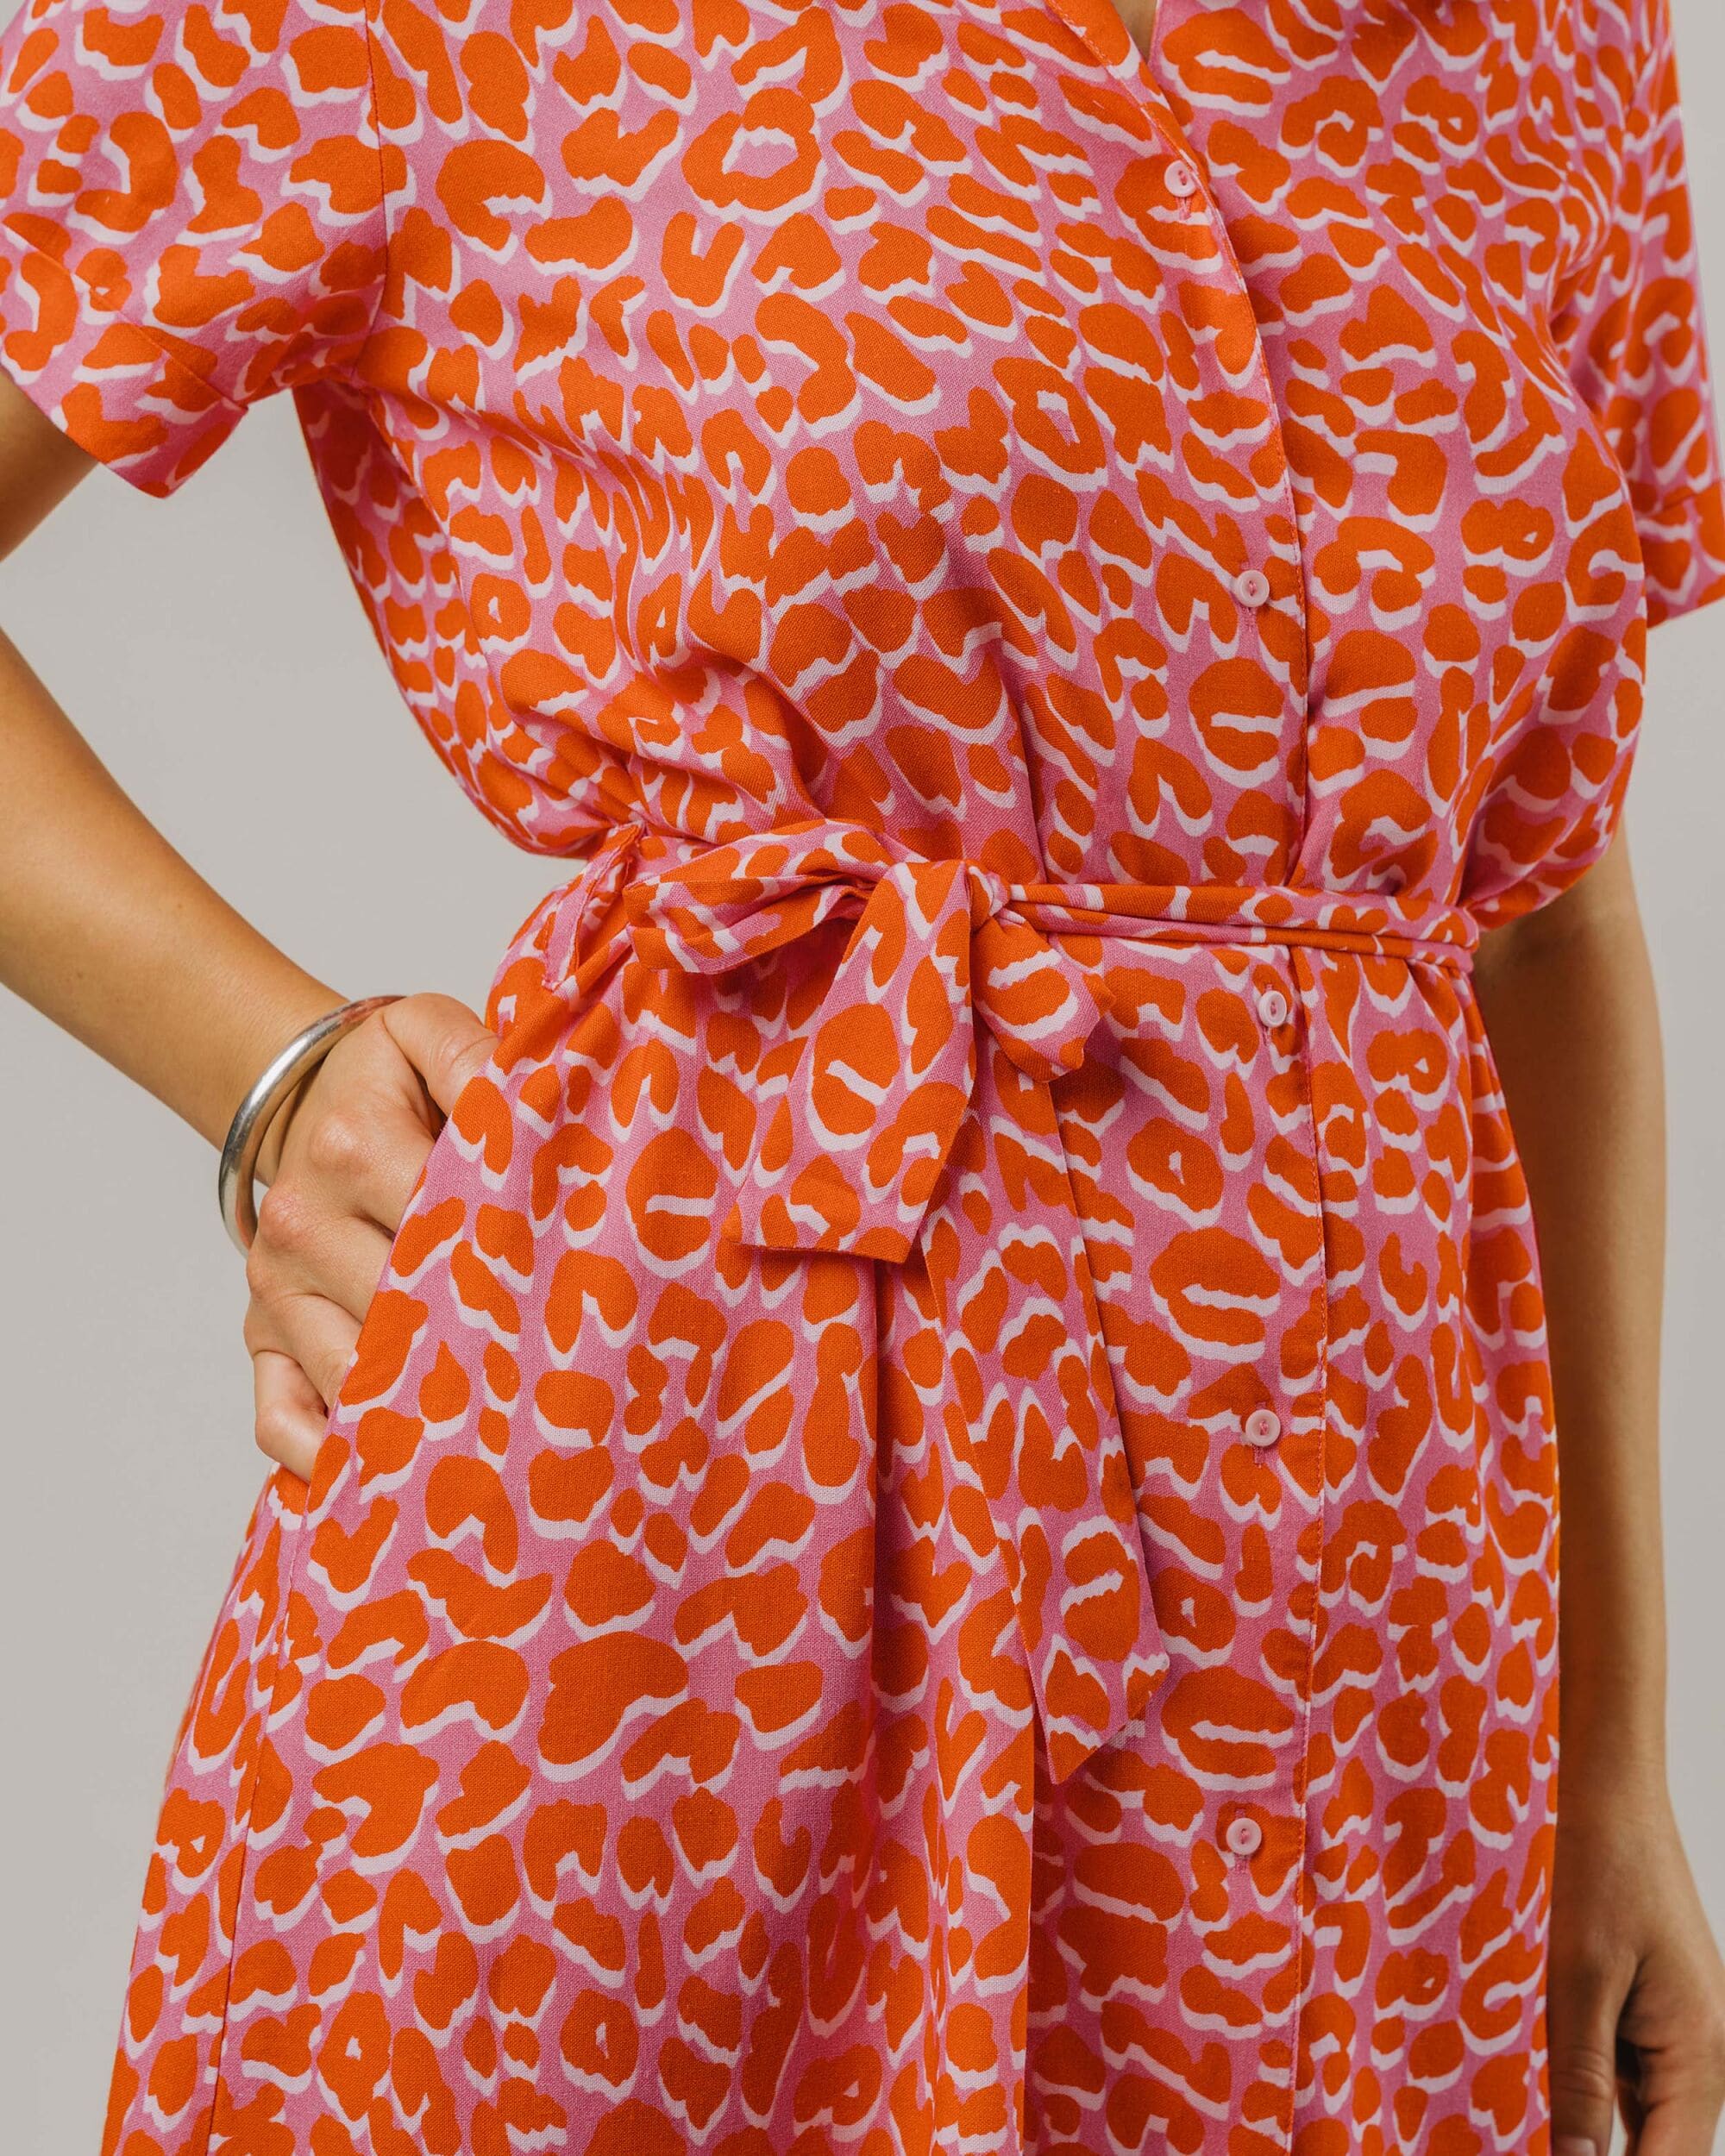 Brava Fabrics Dresses Long Dress Cocktail Pink sustainable fashion ethical fashion